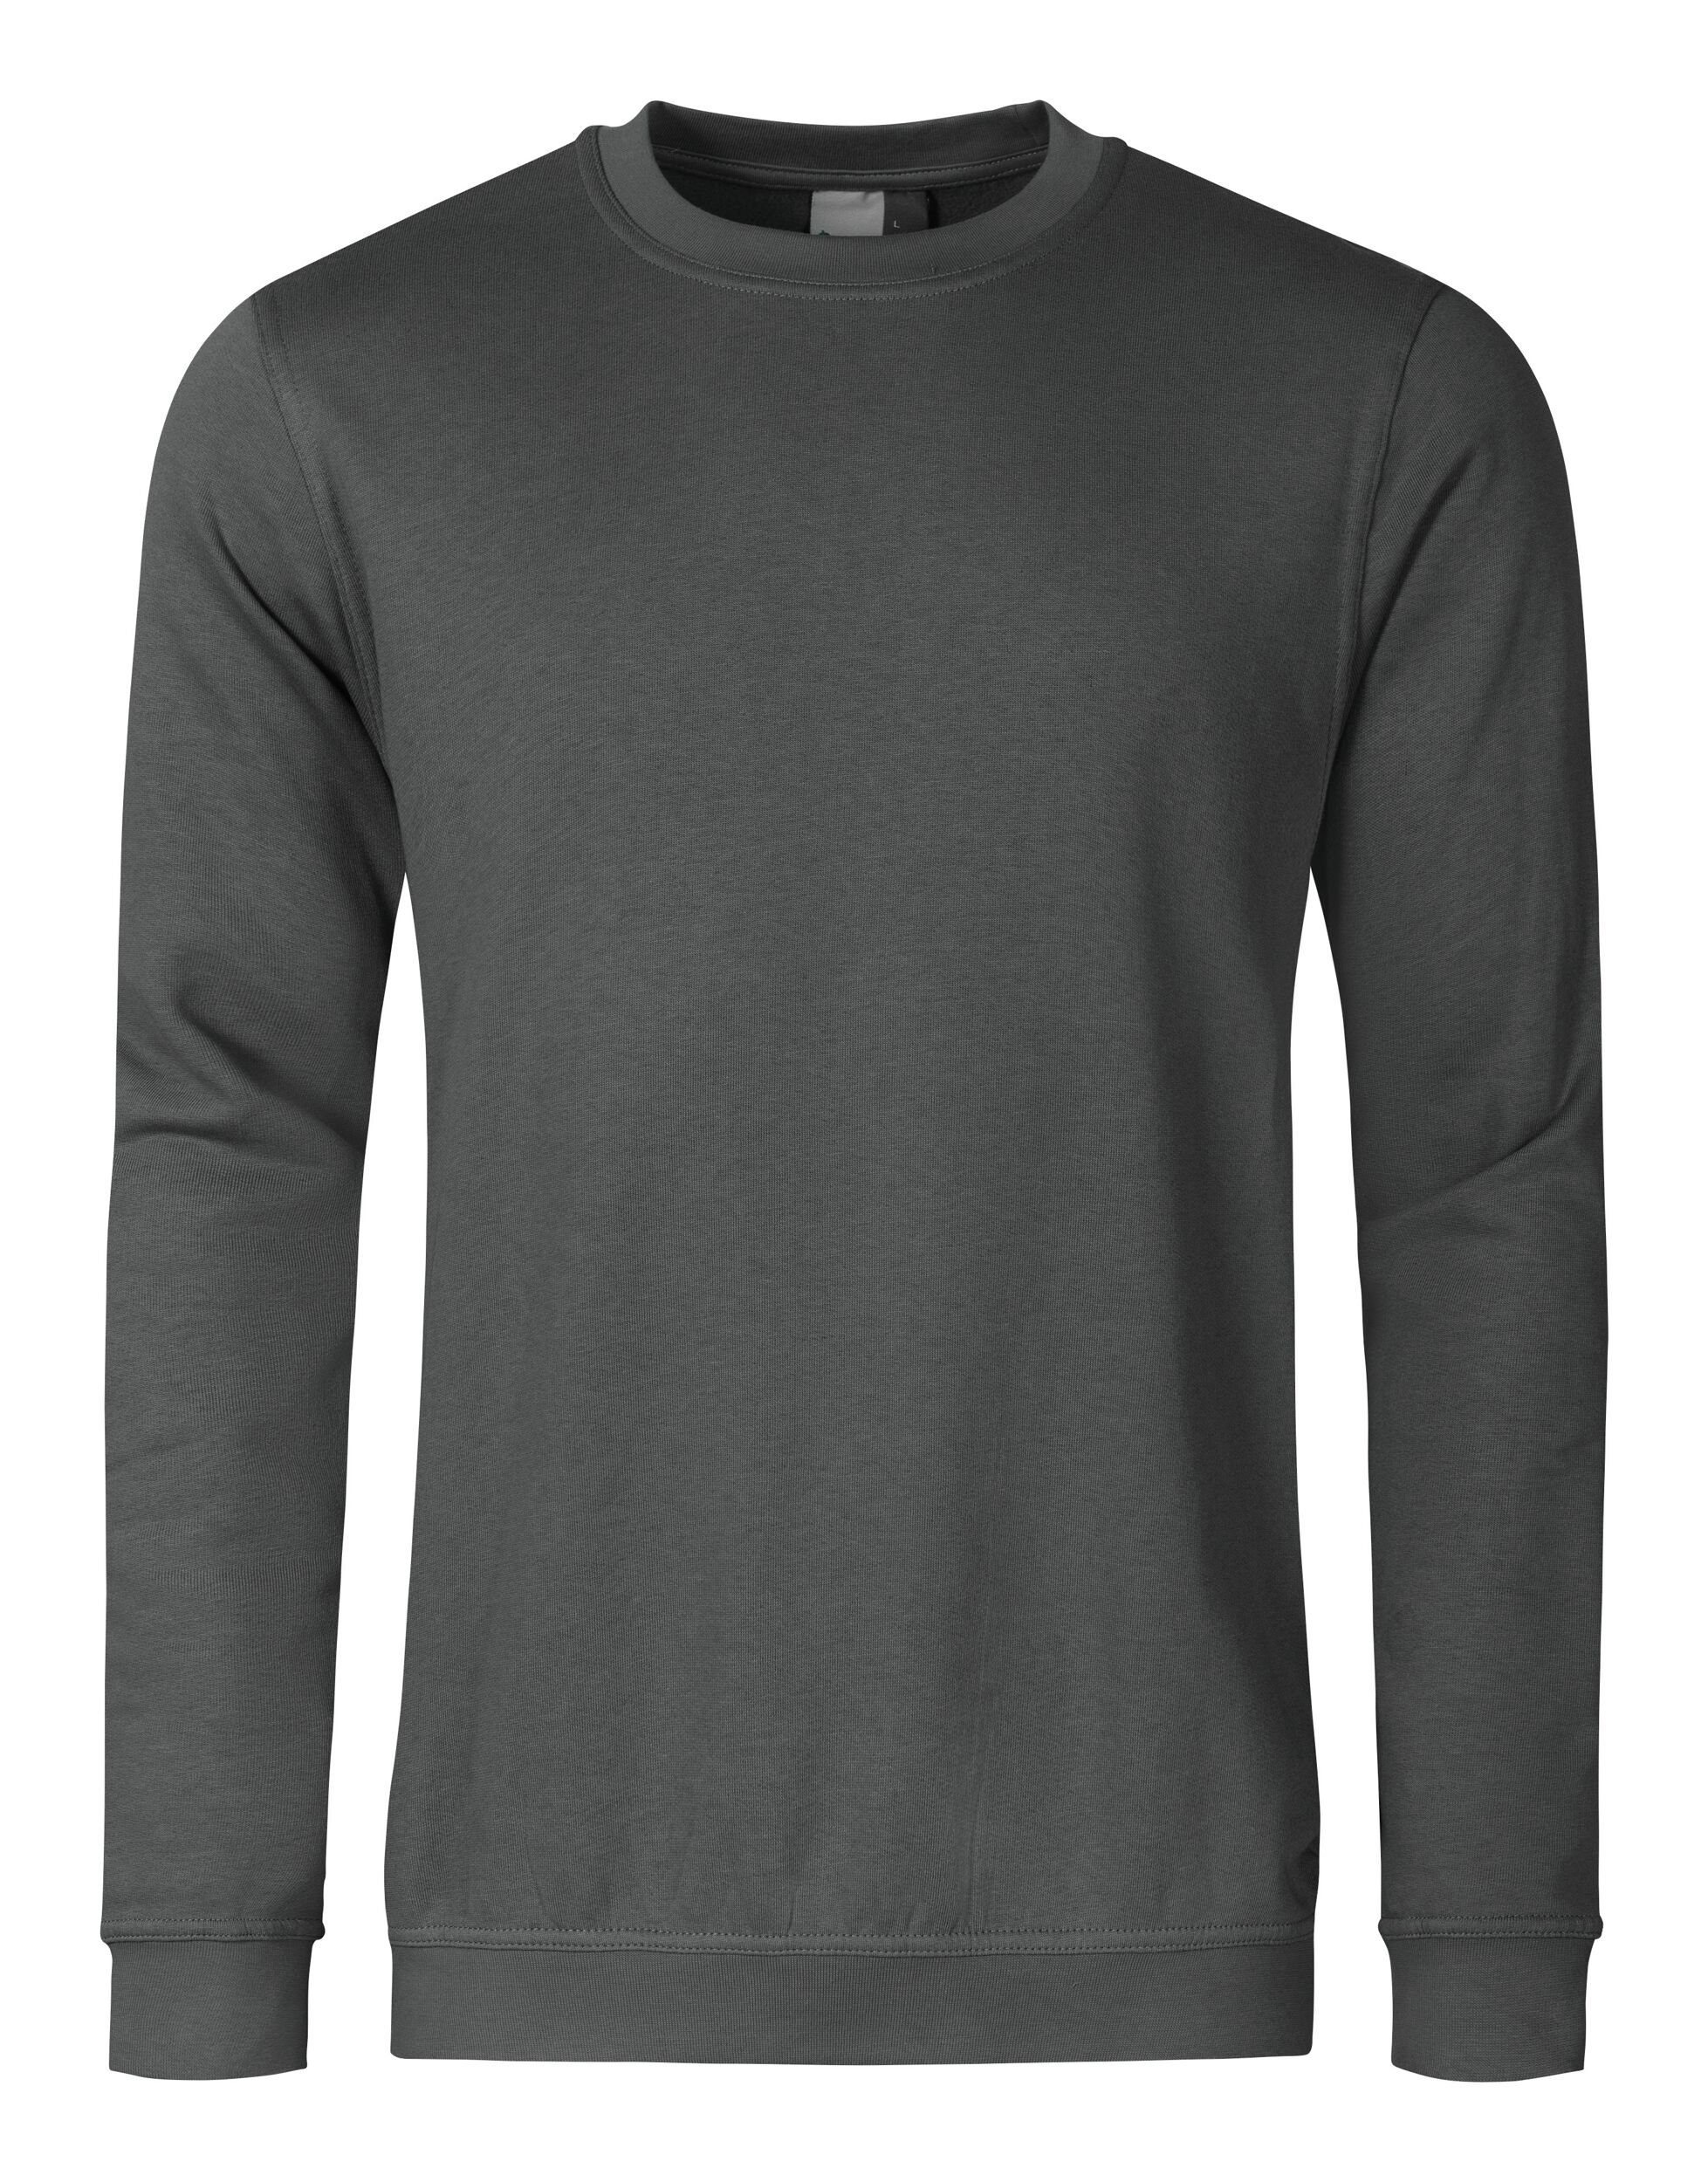 Promodoro Sweatshirt Größe L, steel grey